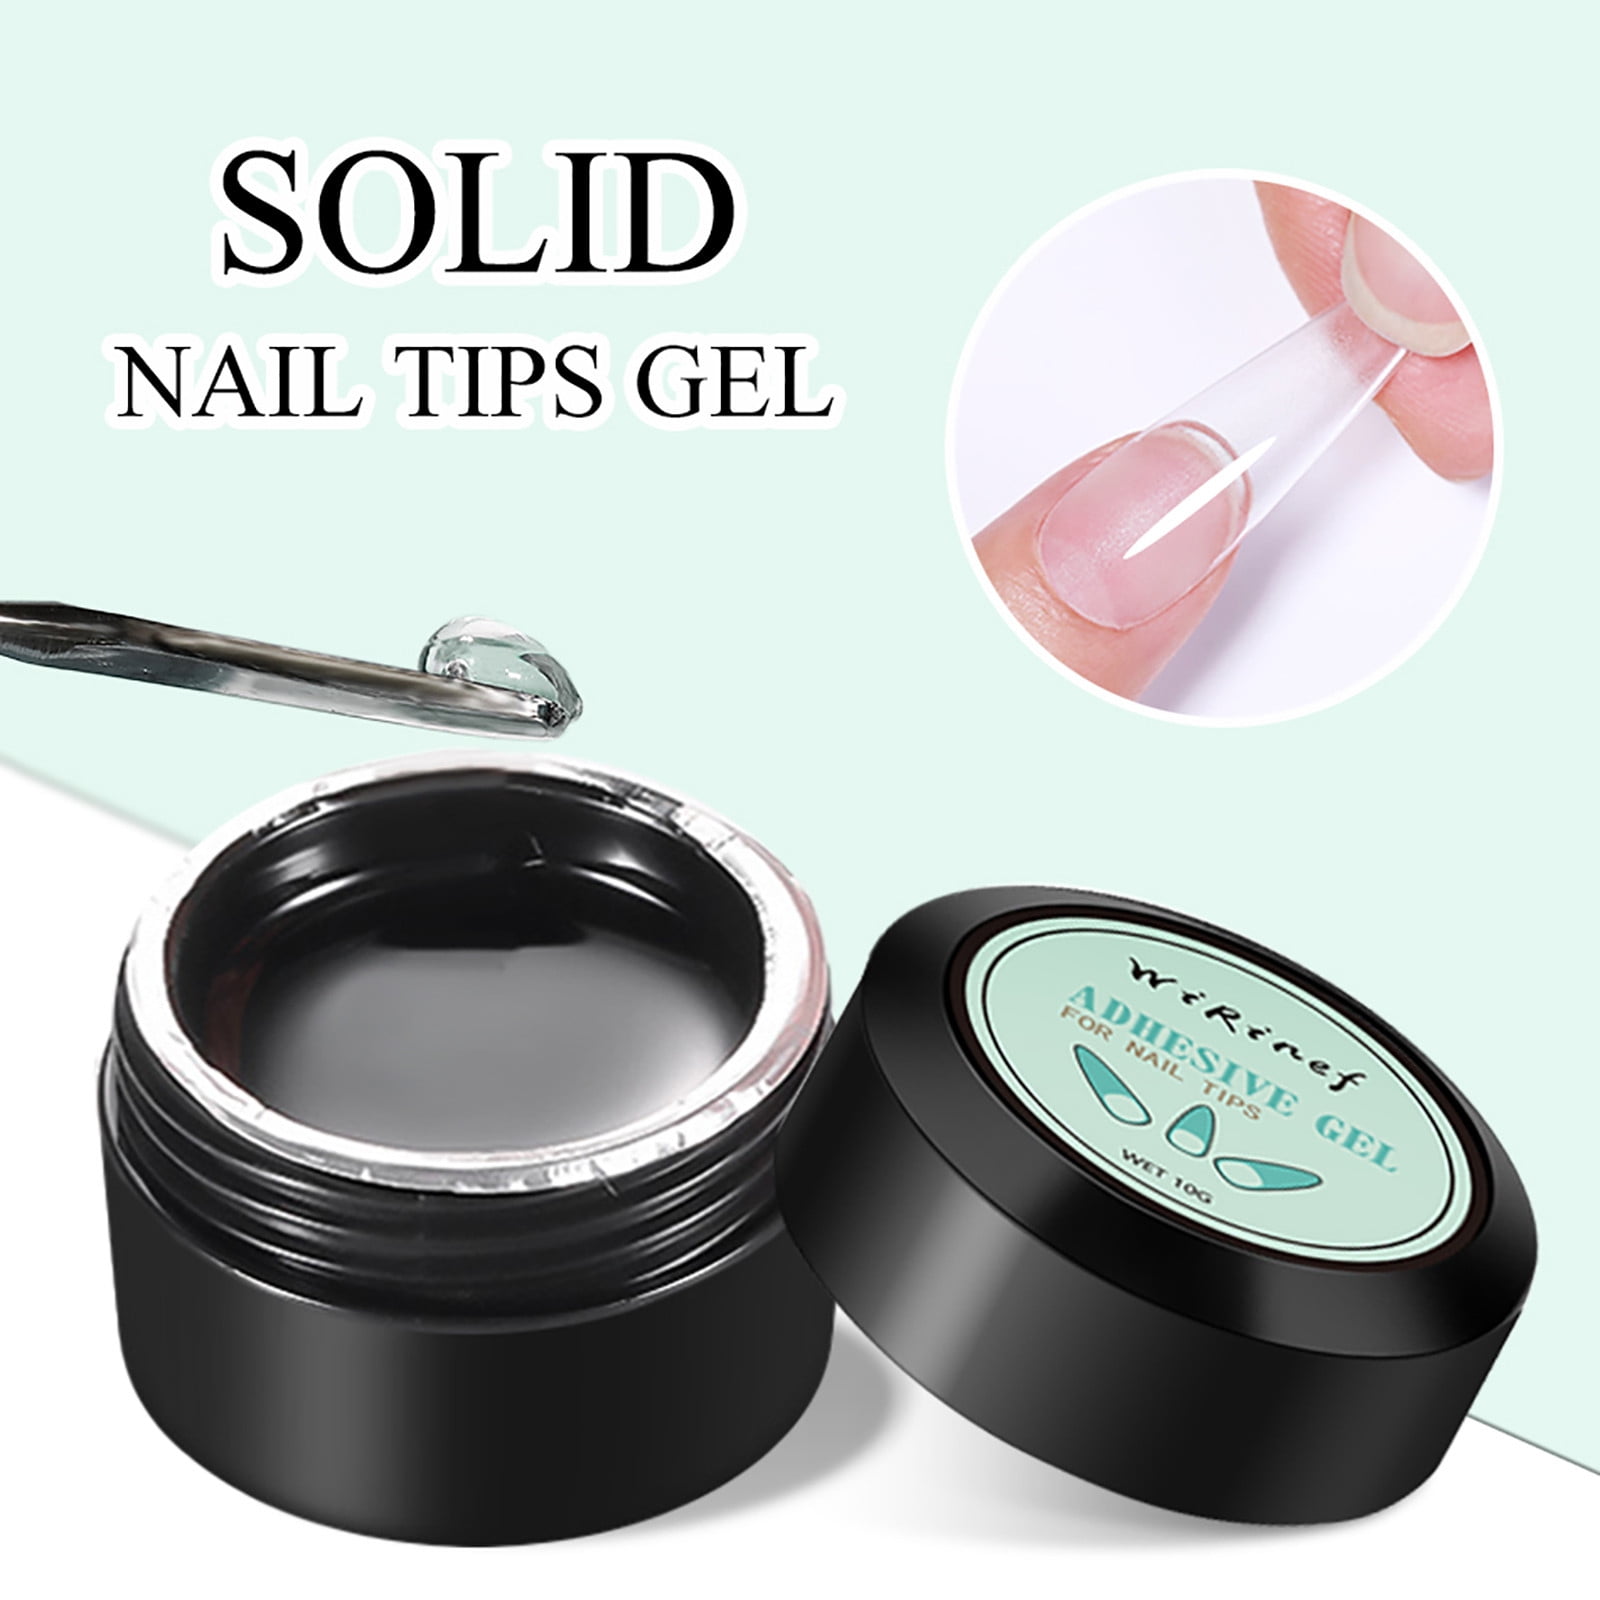 3ml Professional Nail Rhinestones Glue Gel Home Use Nail Glue Manicure Tool  T4S5